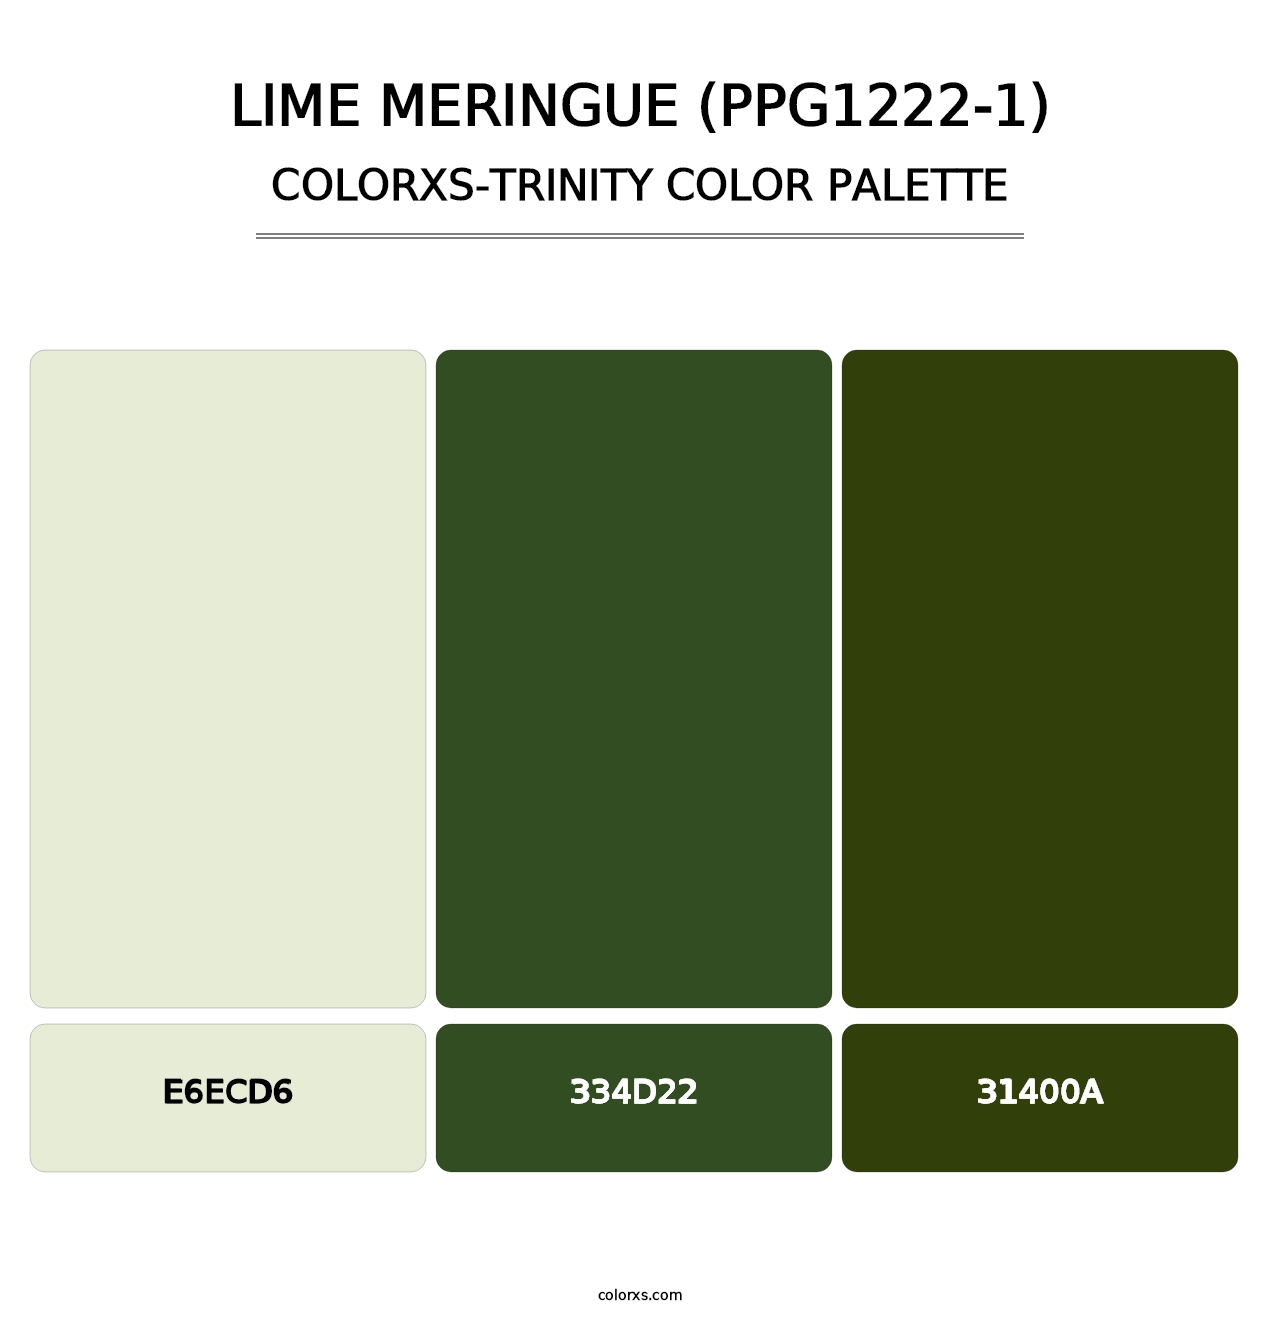 Lime Meringue (PPG1222-1) - Colorxs Trinity Palette